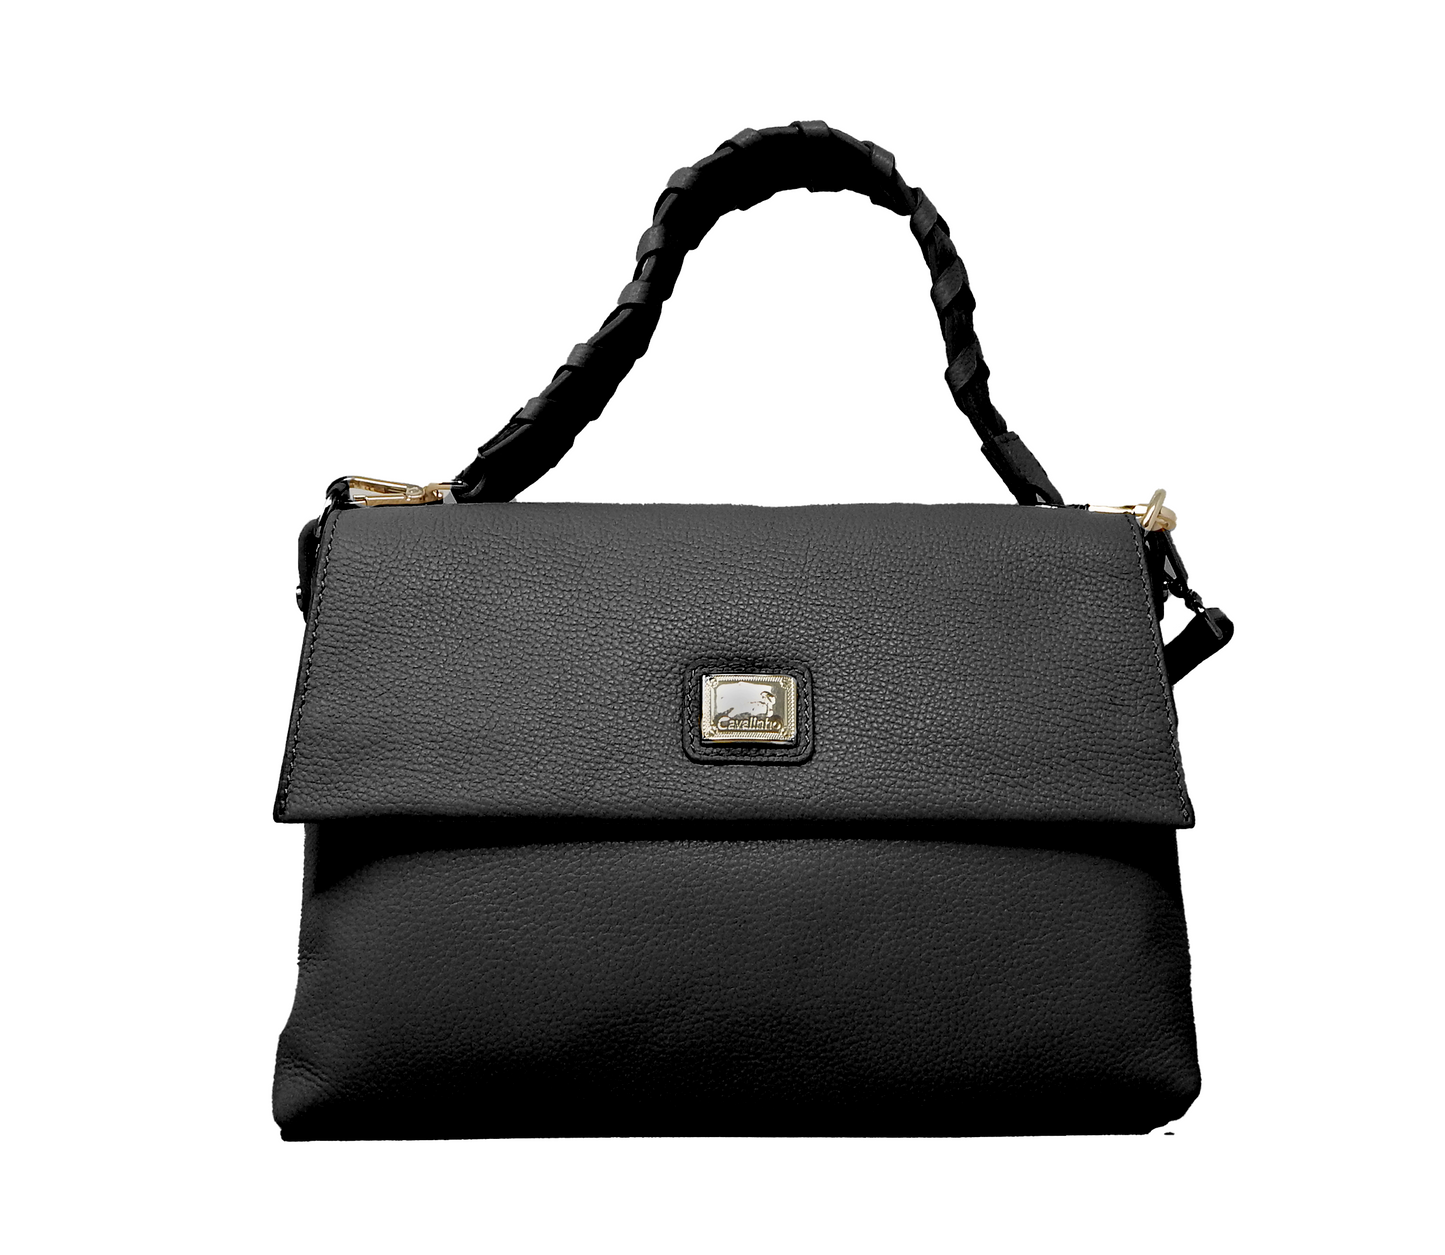 Cavalinho Infinity 3 in 1: Clutch, Handbag or Crossbody Bag - Black - 18230458_01_f